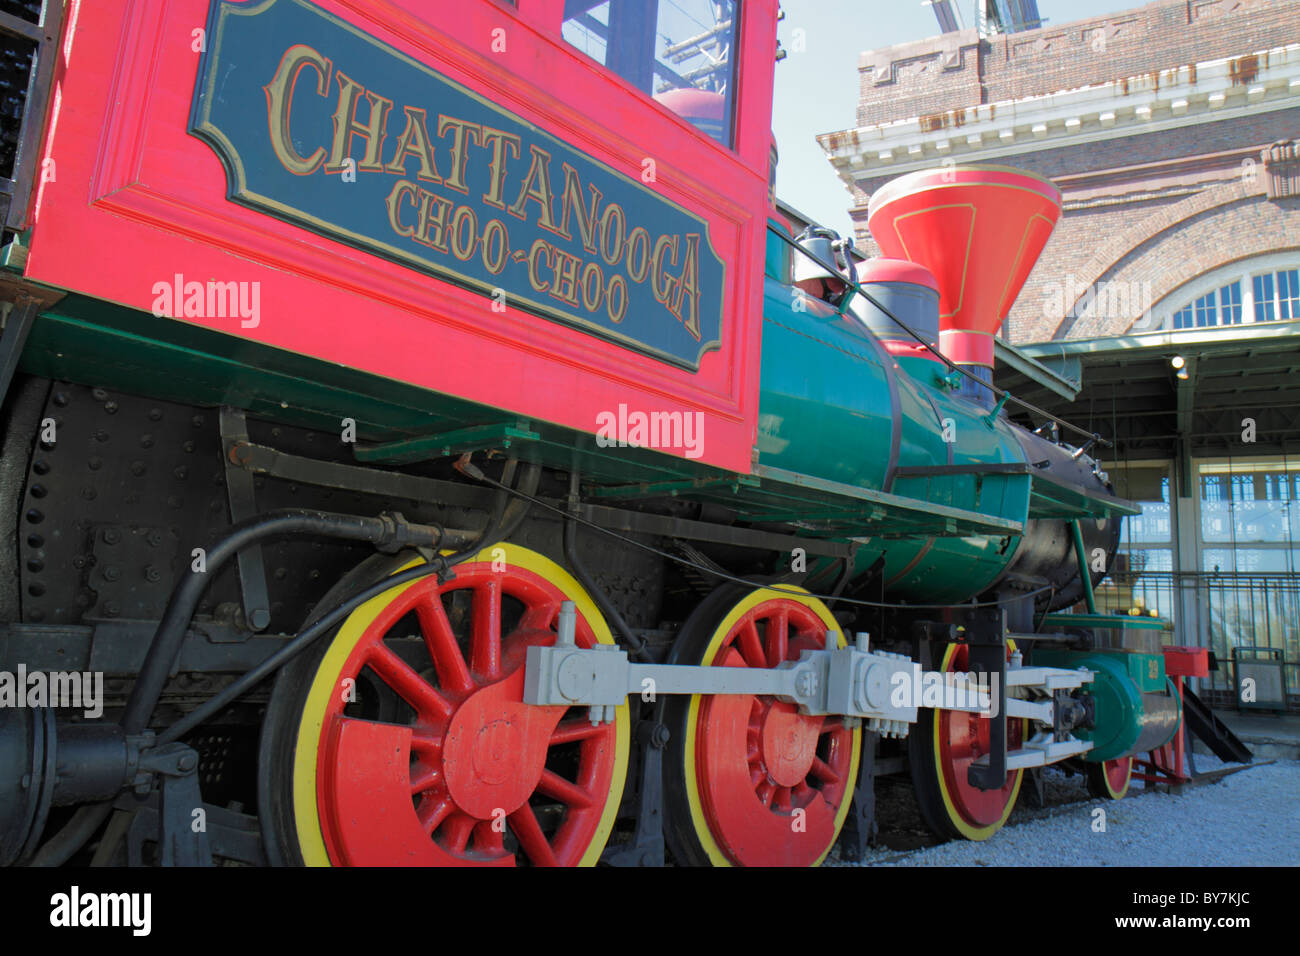 Tennessee Chattanooga,Chattanooga Choo Choo,hotel,Terminal Station,historicrailway,preservation,train,railroad,steam locomotive,Glenn Miller,big band, Stock Photo